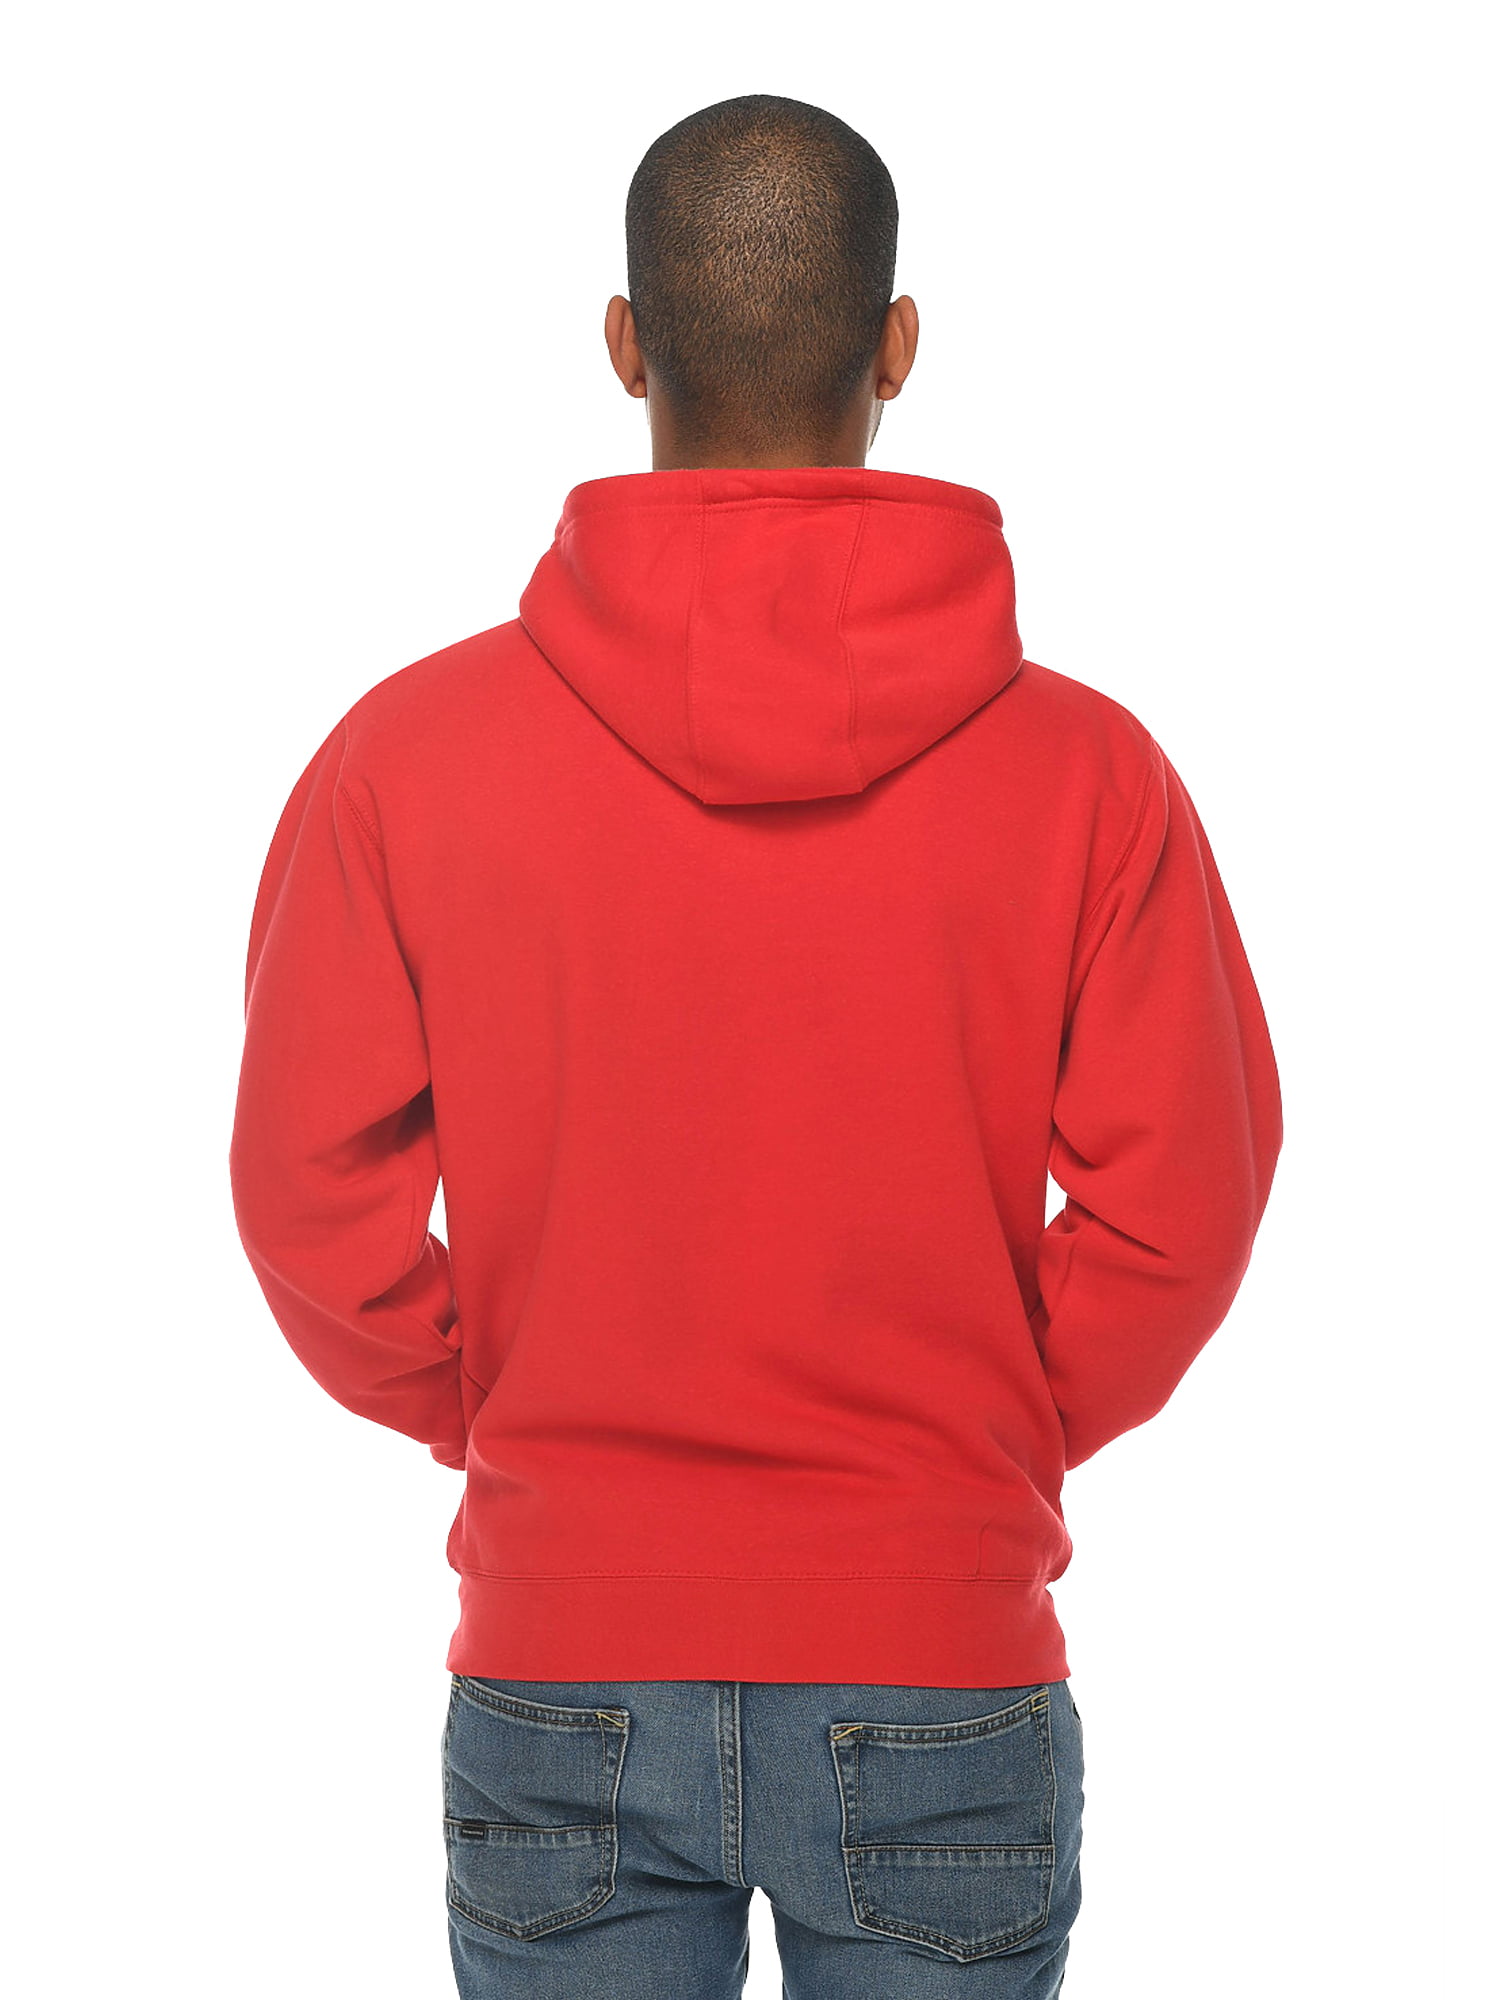 Red Hoodie White Sweatshirt Hoodies for Men Hoody for Women Unisex Zipper  Hoodie for Women Men Hoodie with Zipper 